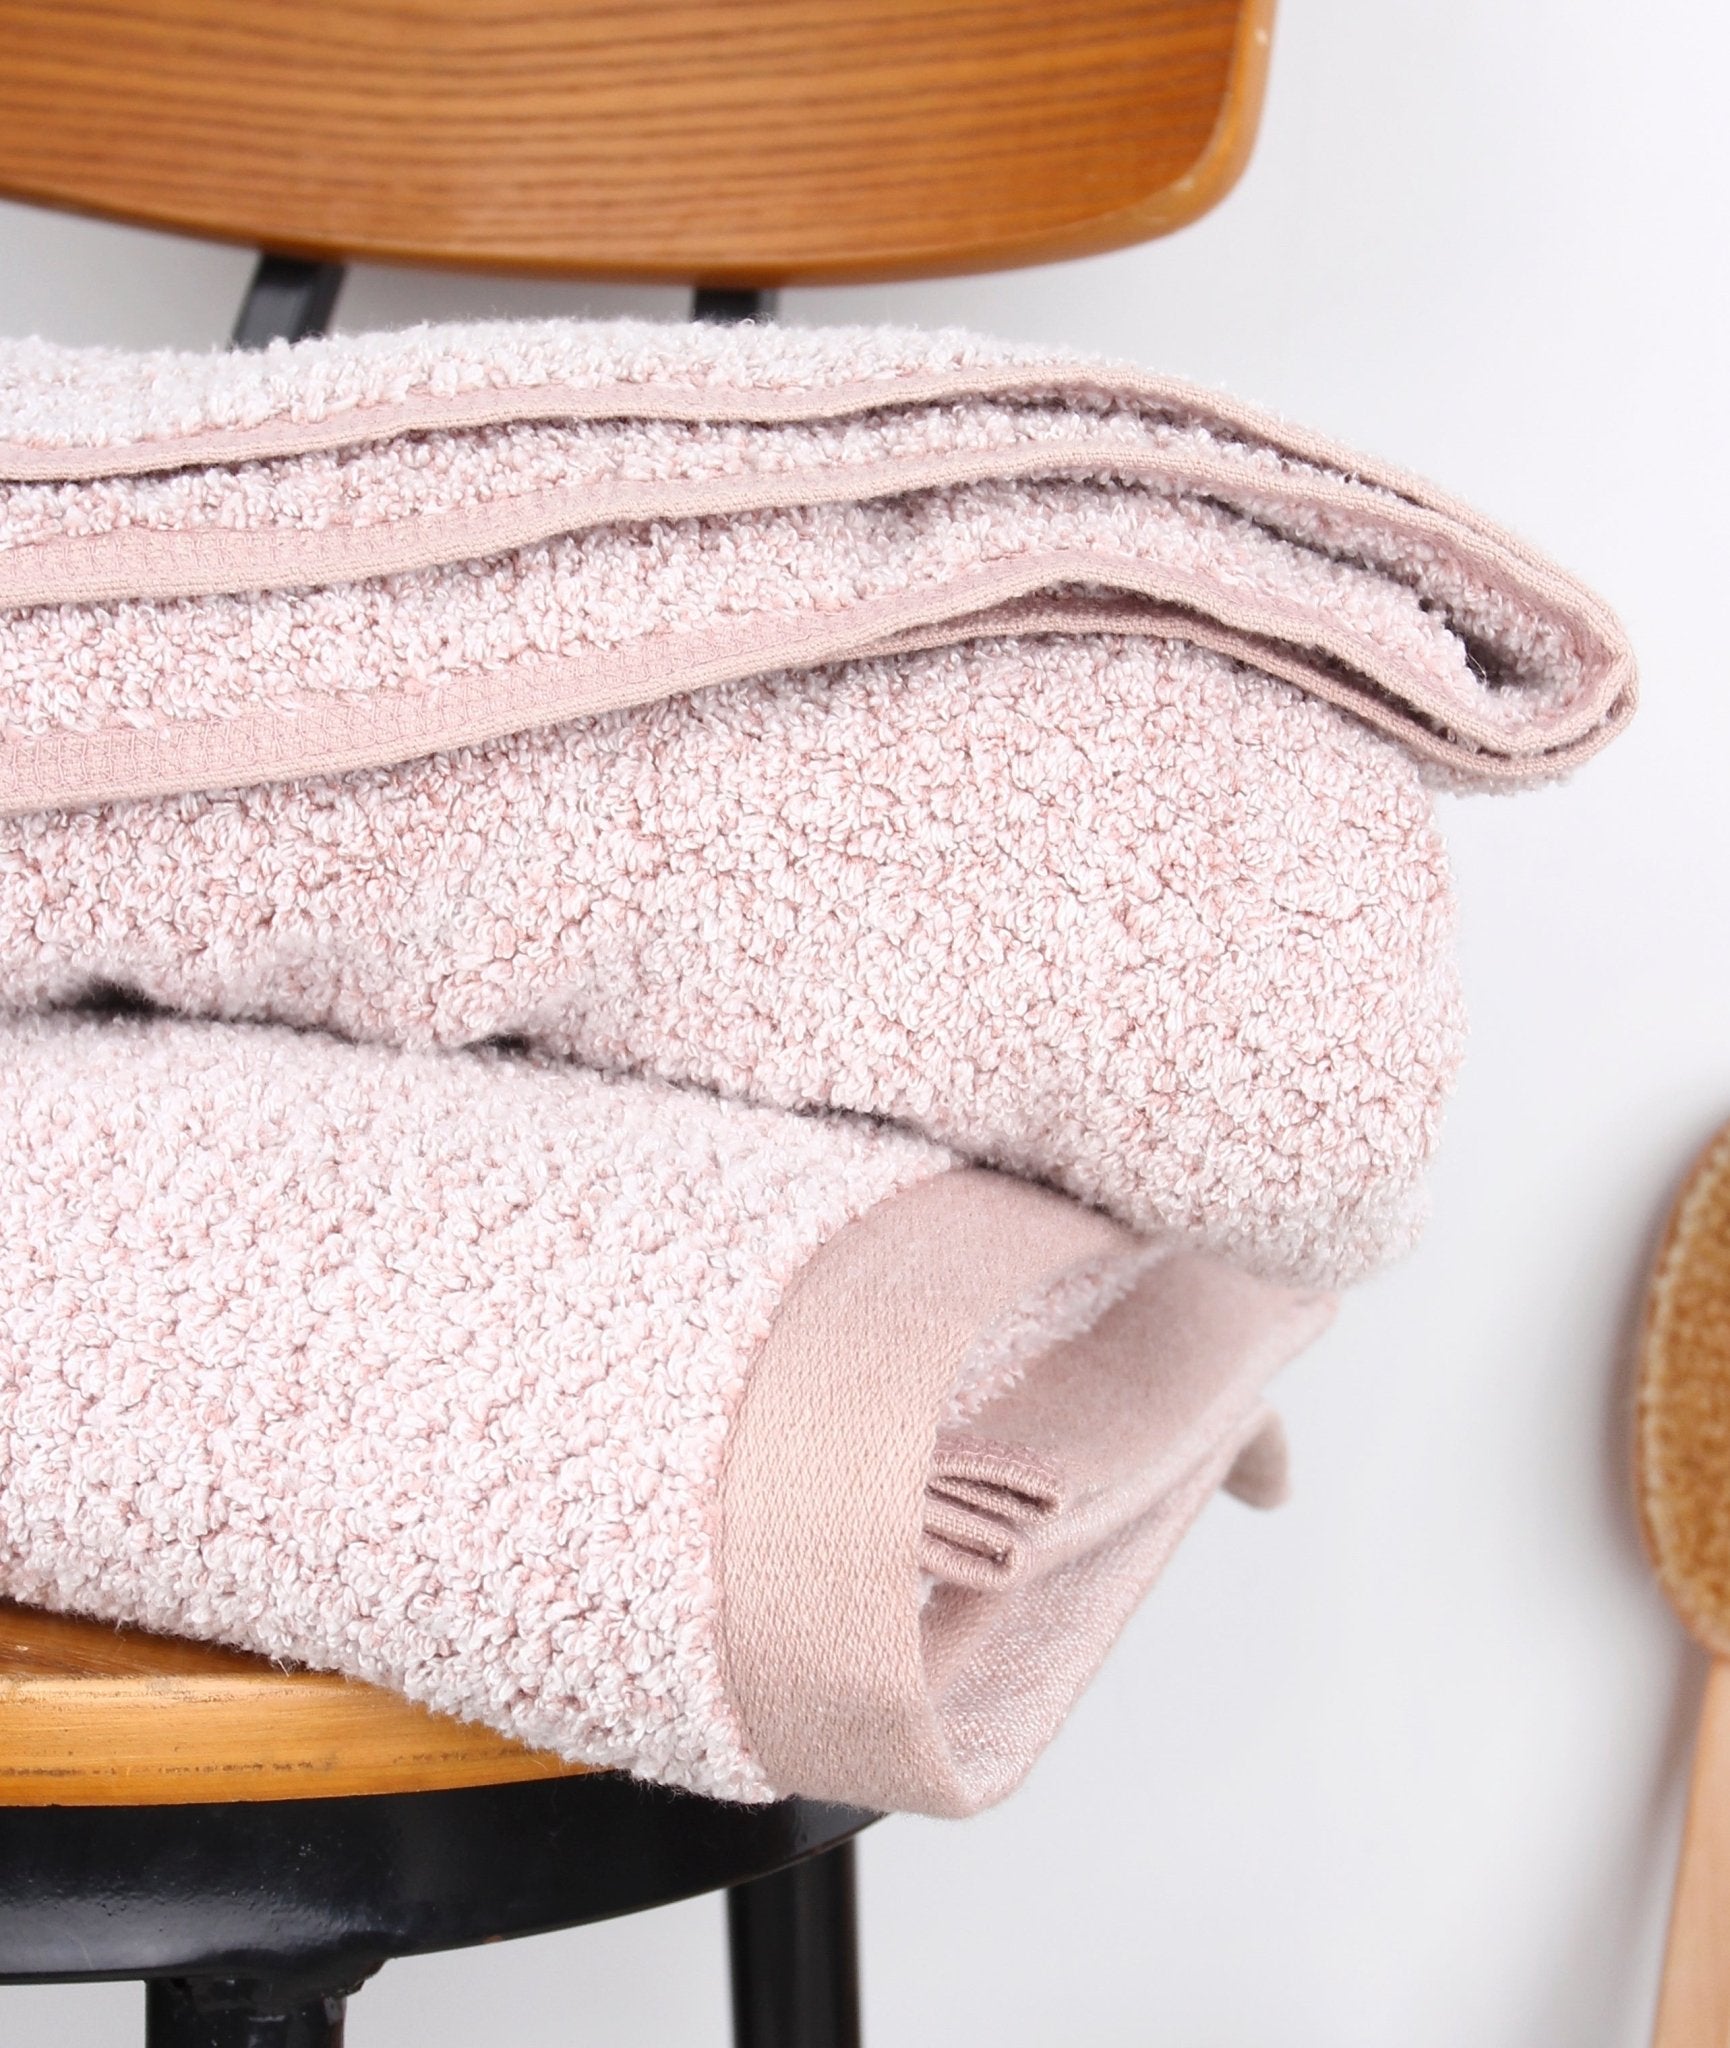 Diamond Jacquard 6 Piece Bath Towel Set Rose by The Everplush Company